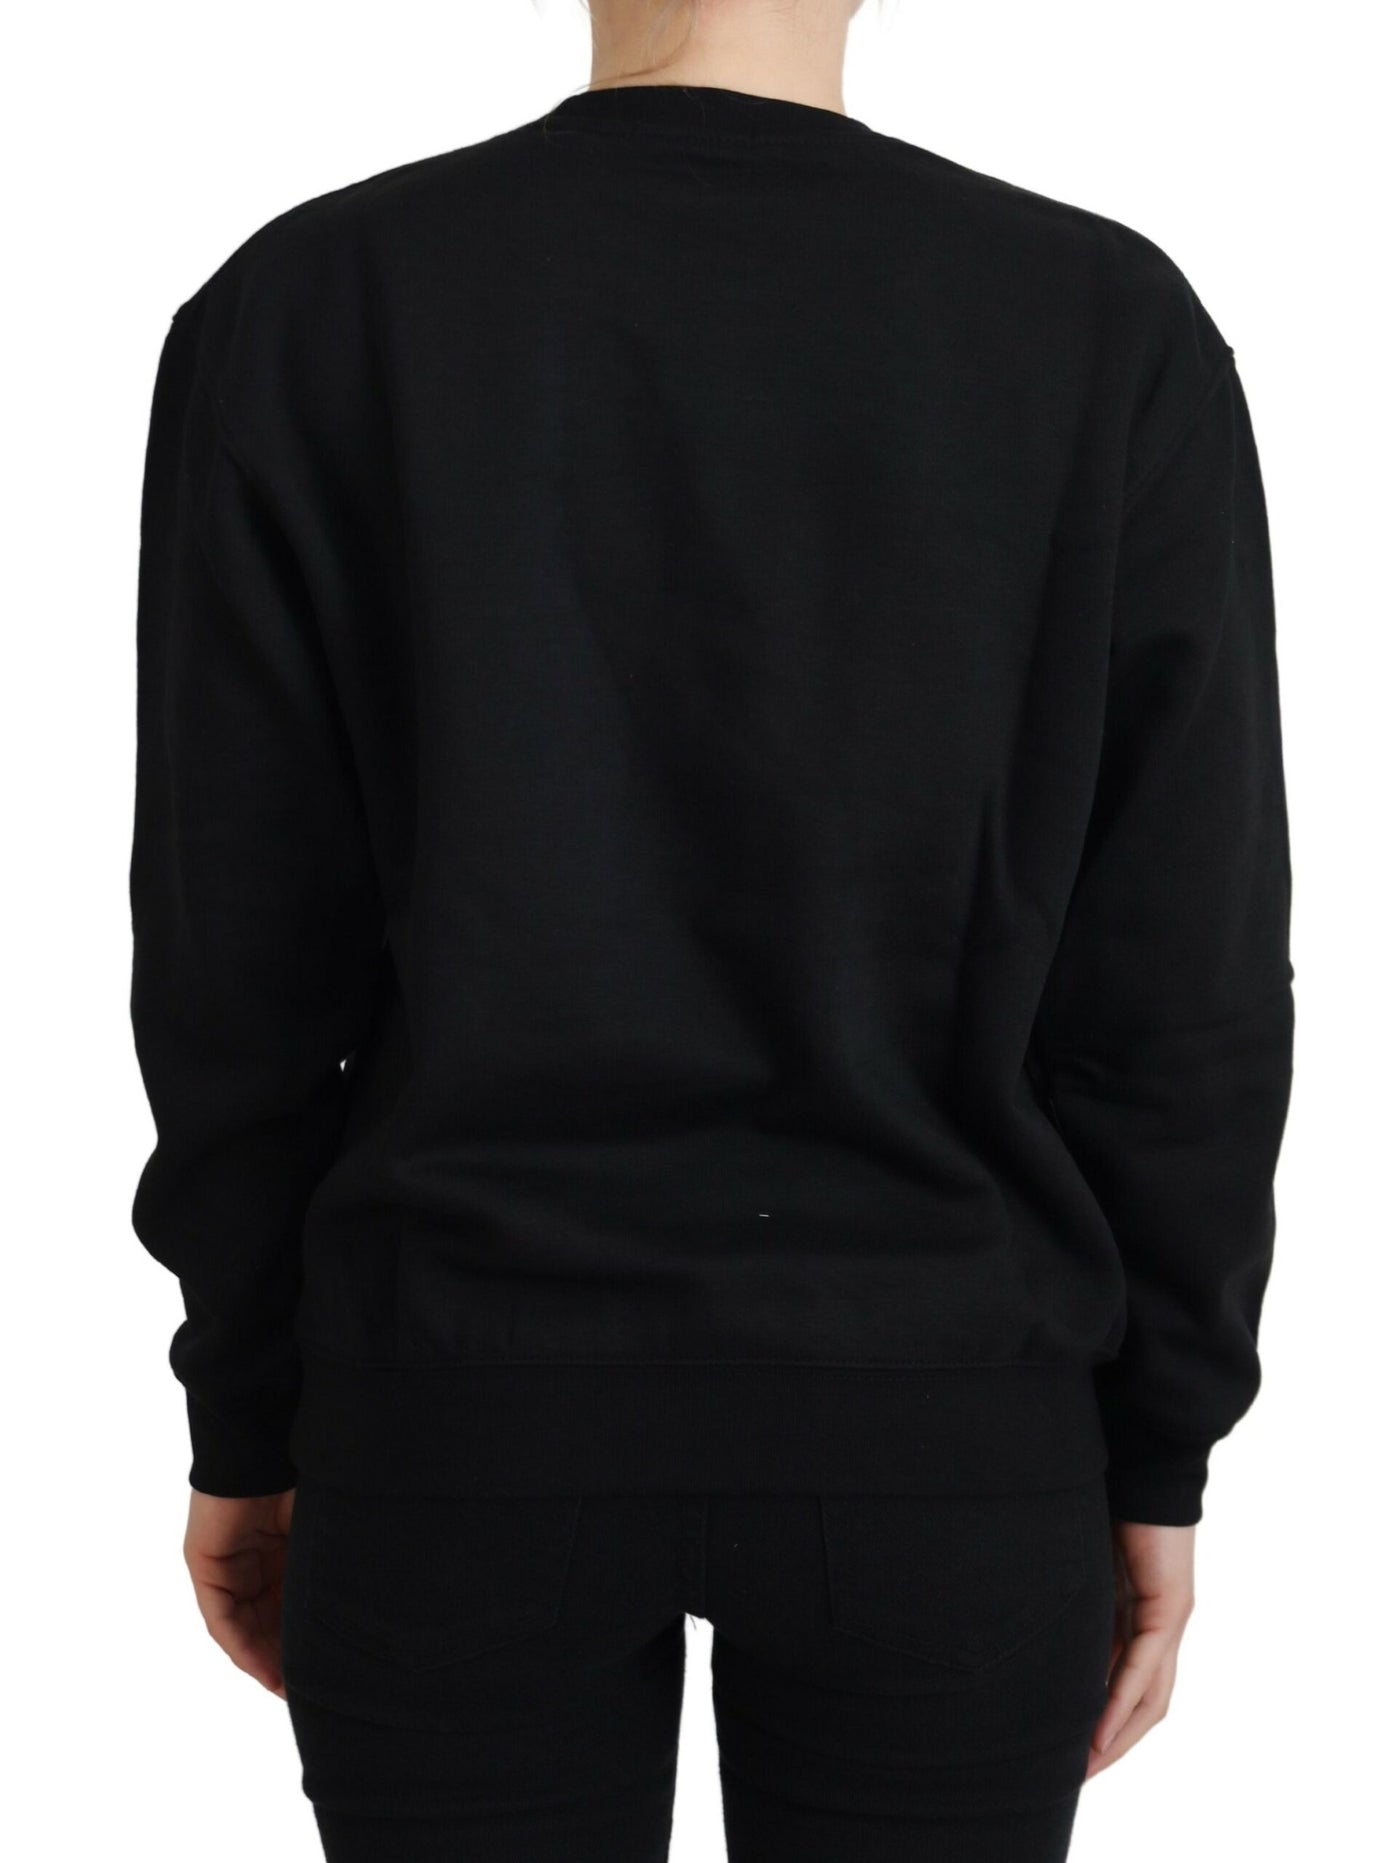 Black Printed Long Sleeves Pullover Sweater